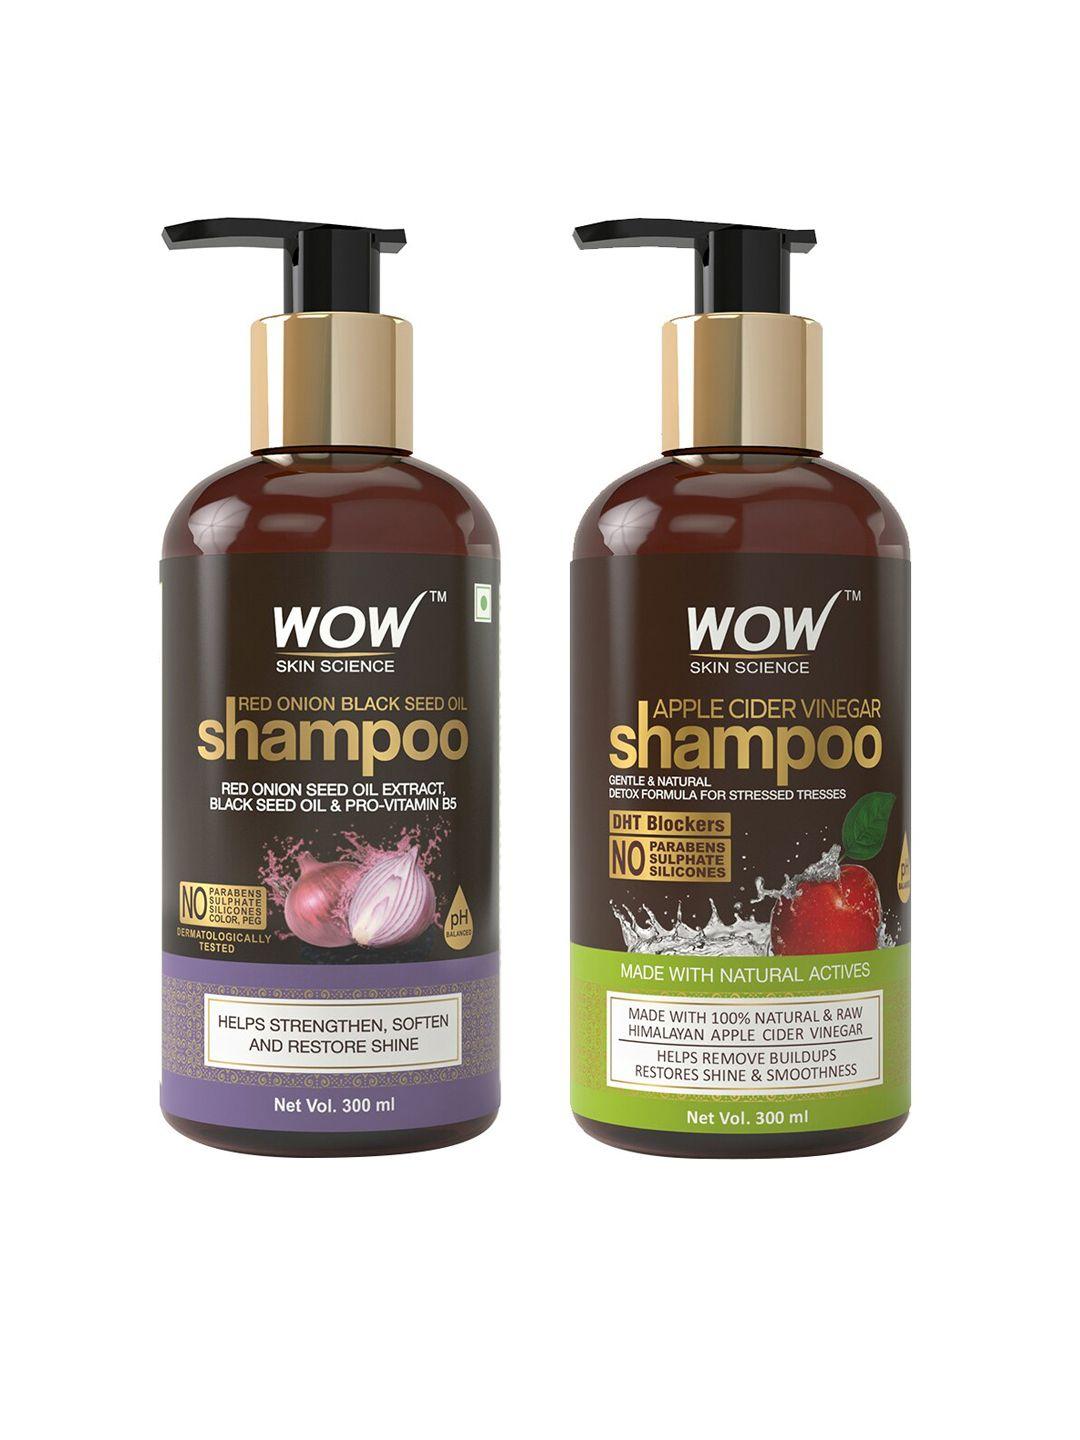 wow skin science set of 2 shampoo